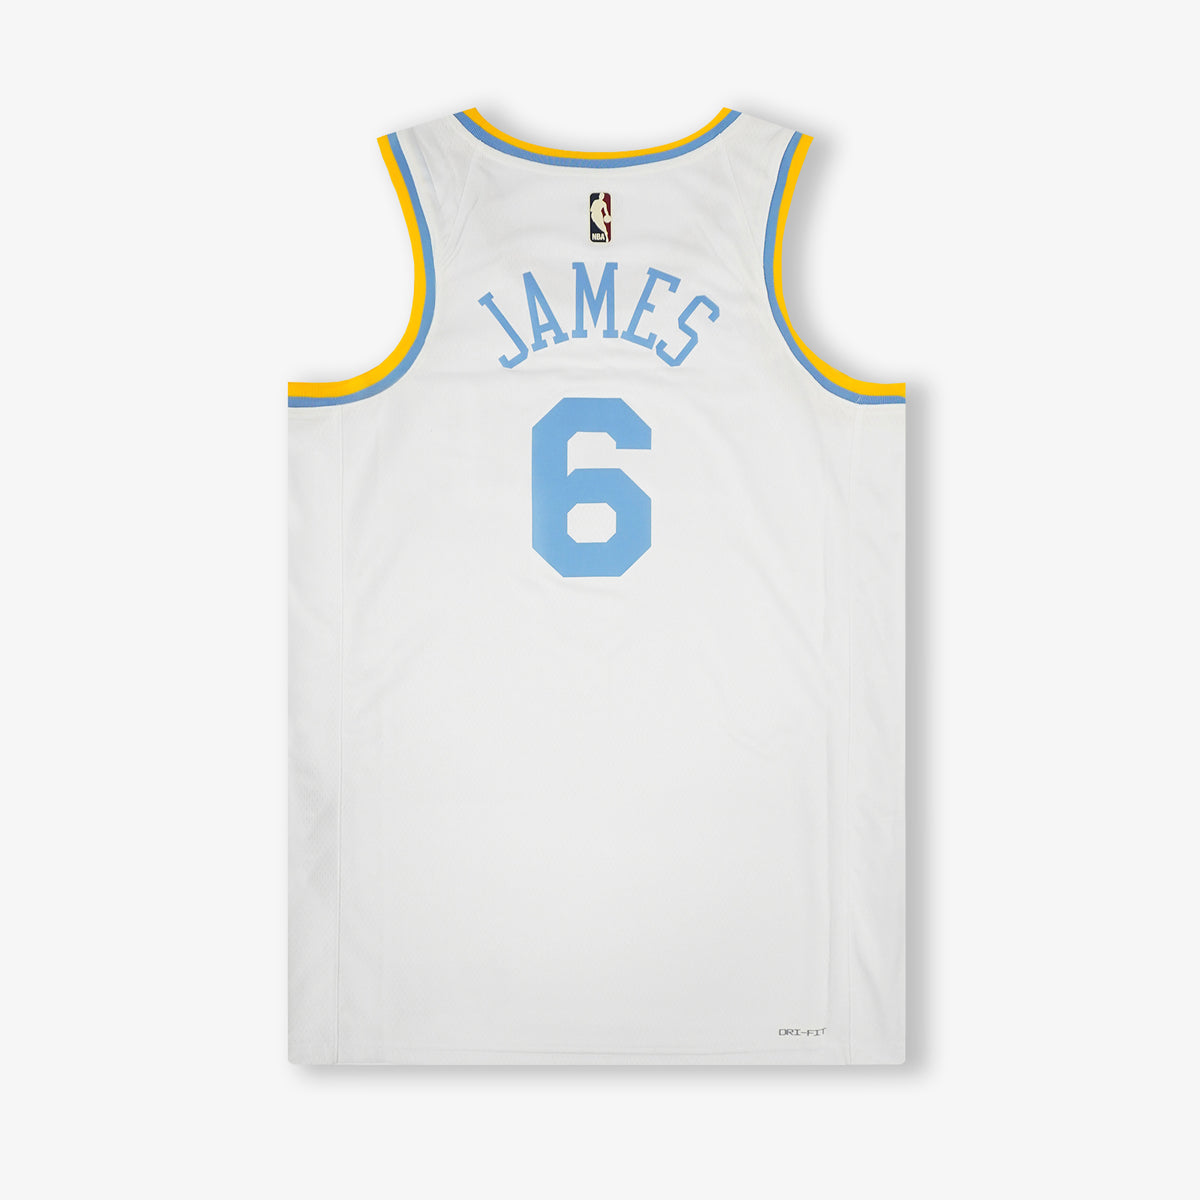 LeBron James Los Angeles Lakers Nike City Edition Swingman Jersey